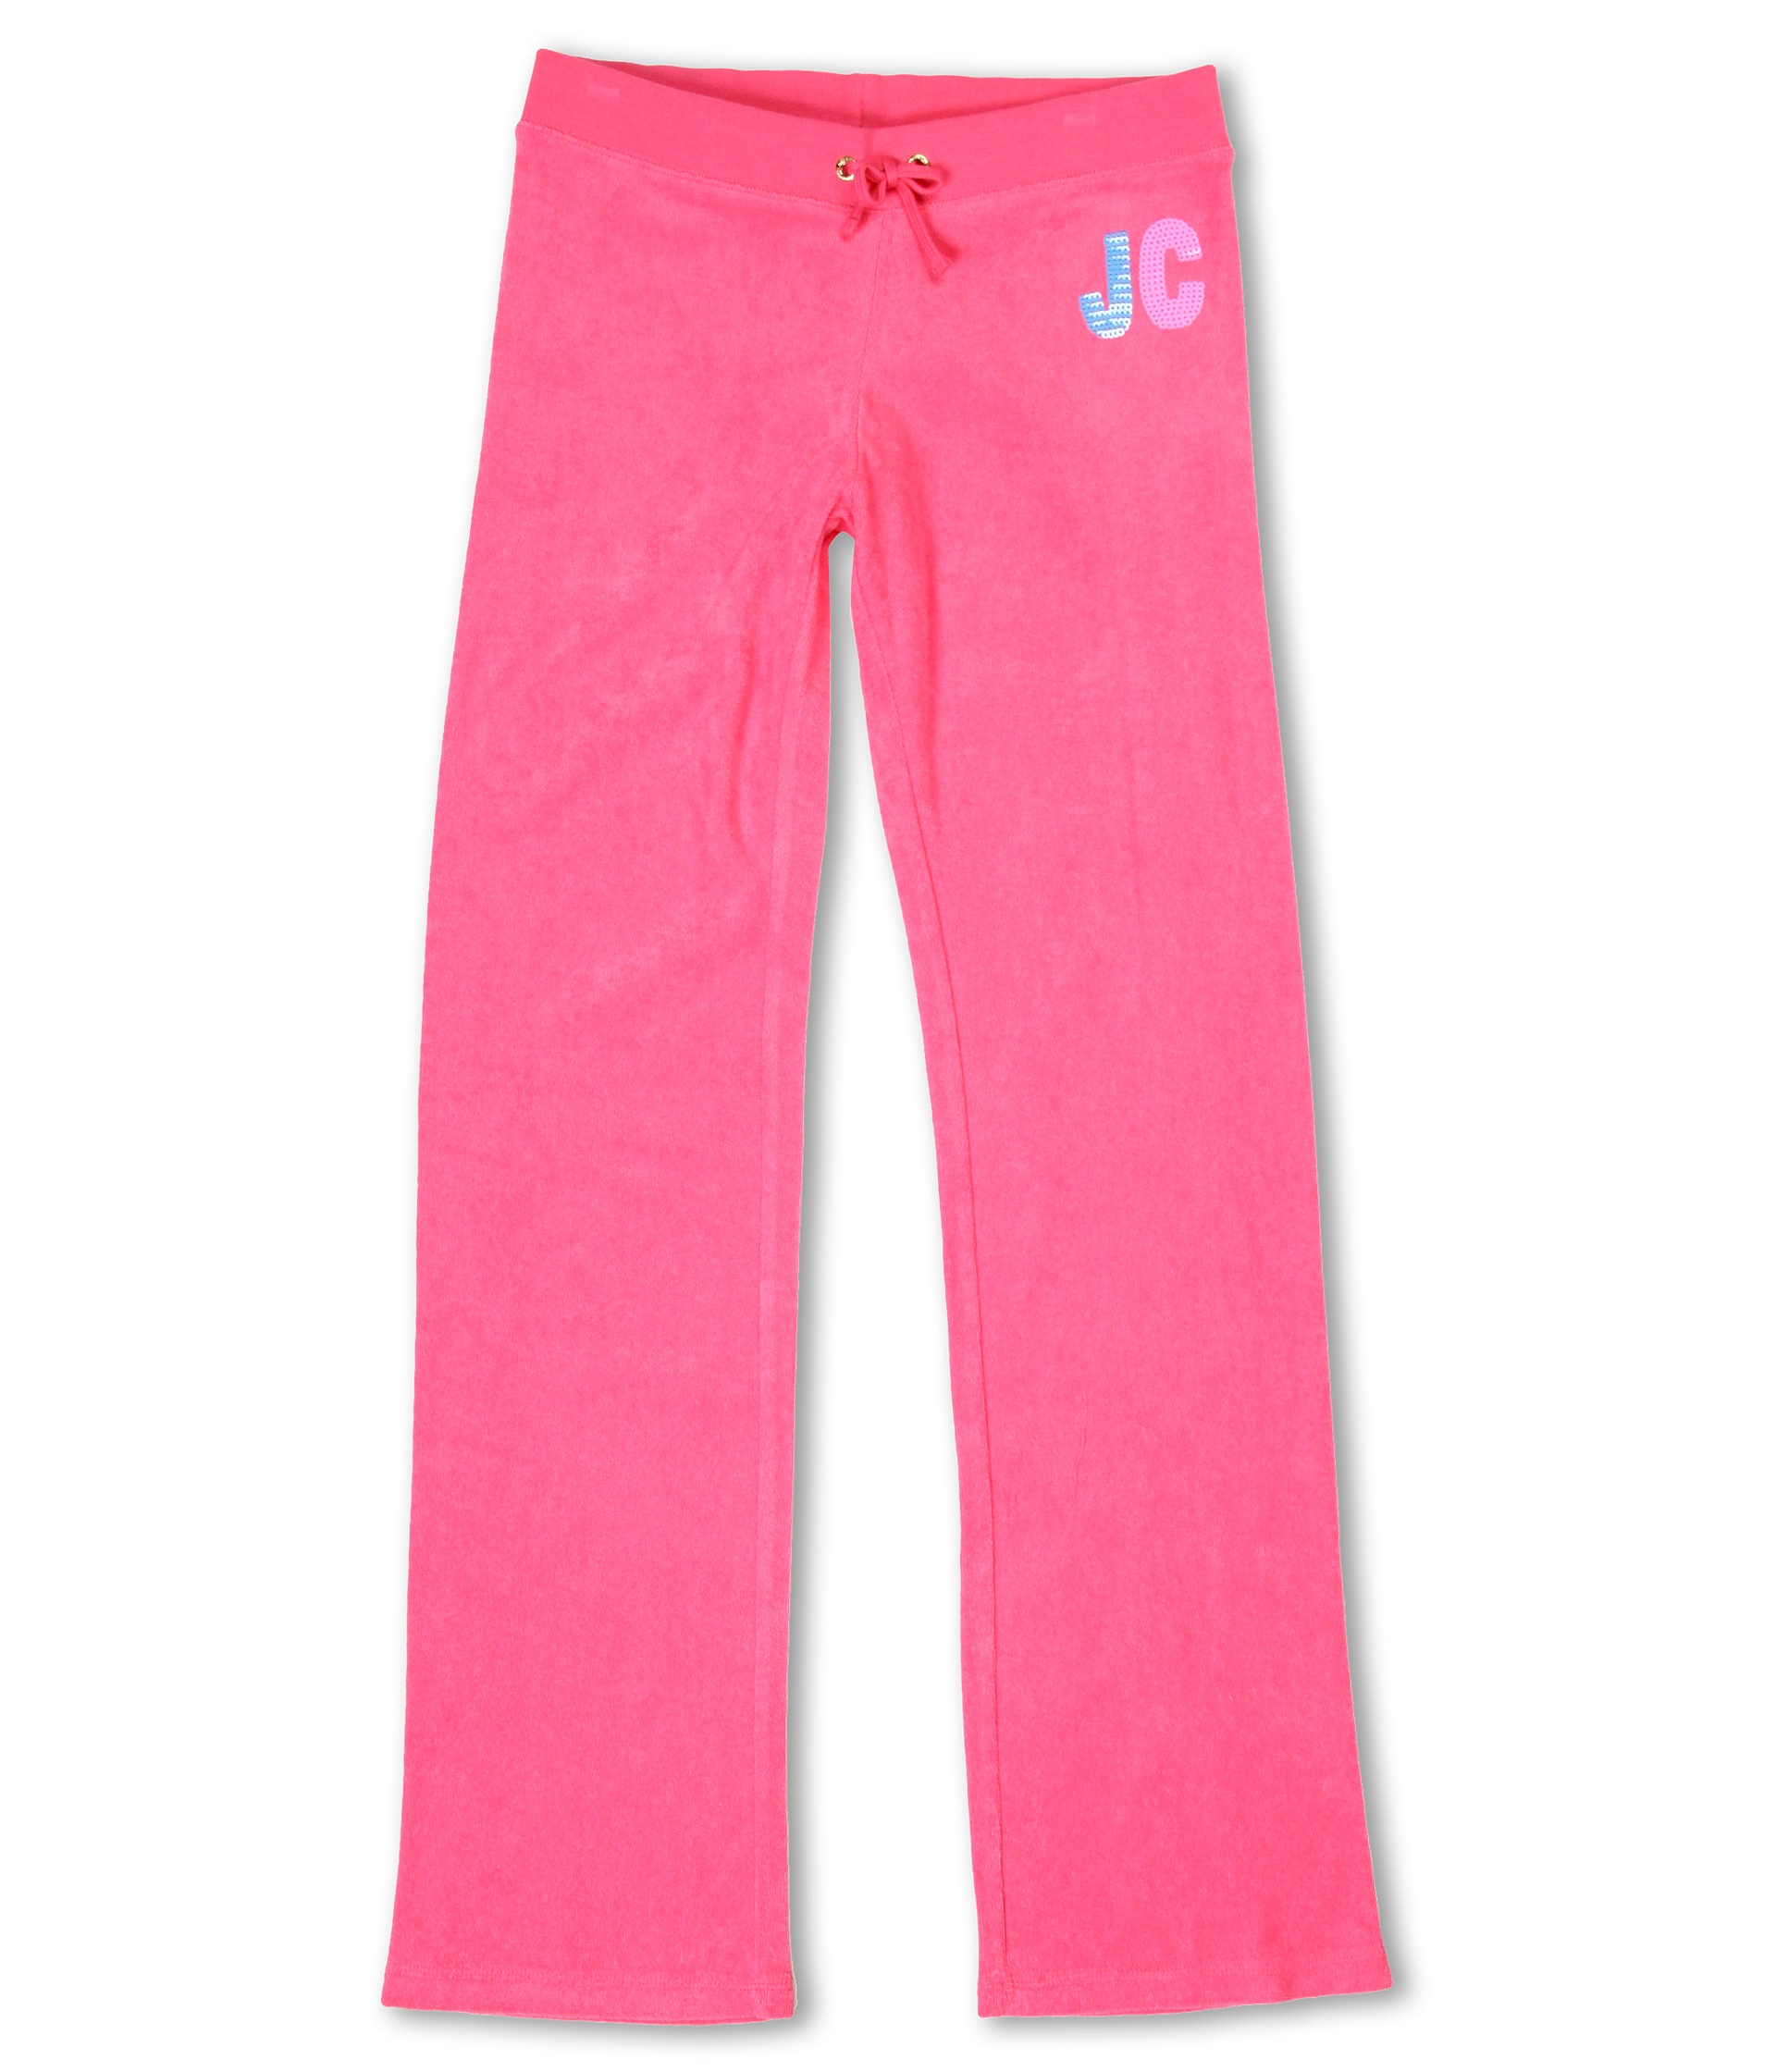   Juicy Micro Terry Original Leg Pant (Little Kids/Big Kids) $82.00 NEW